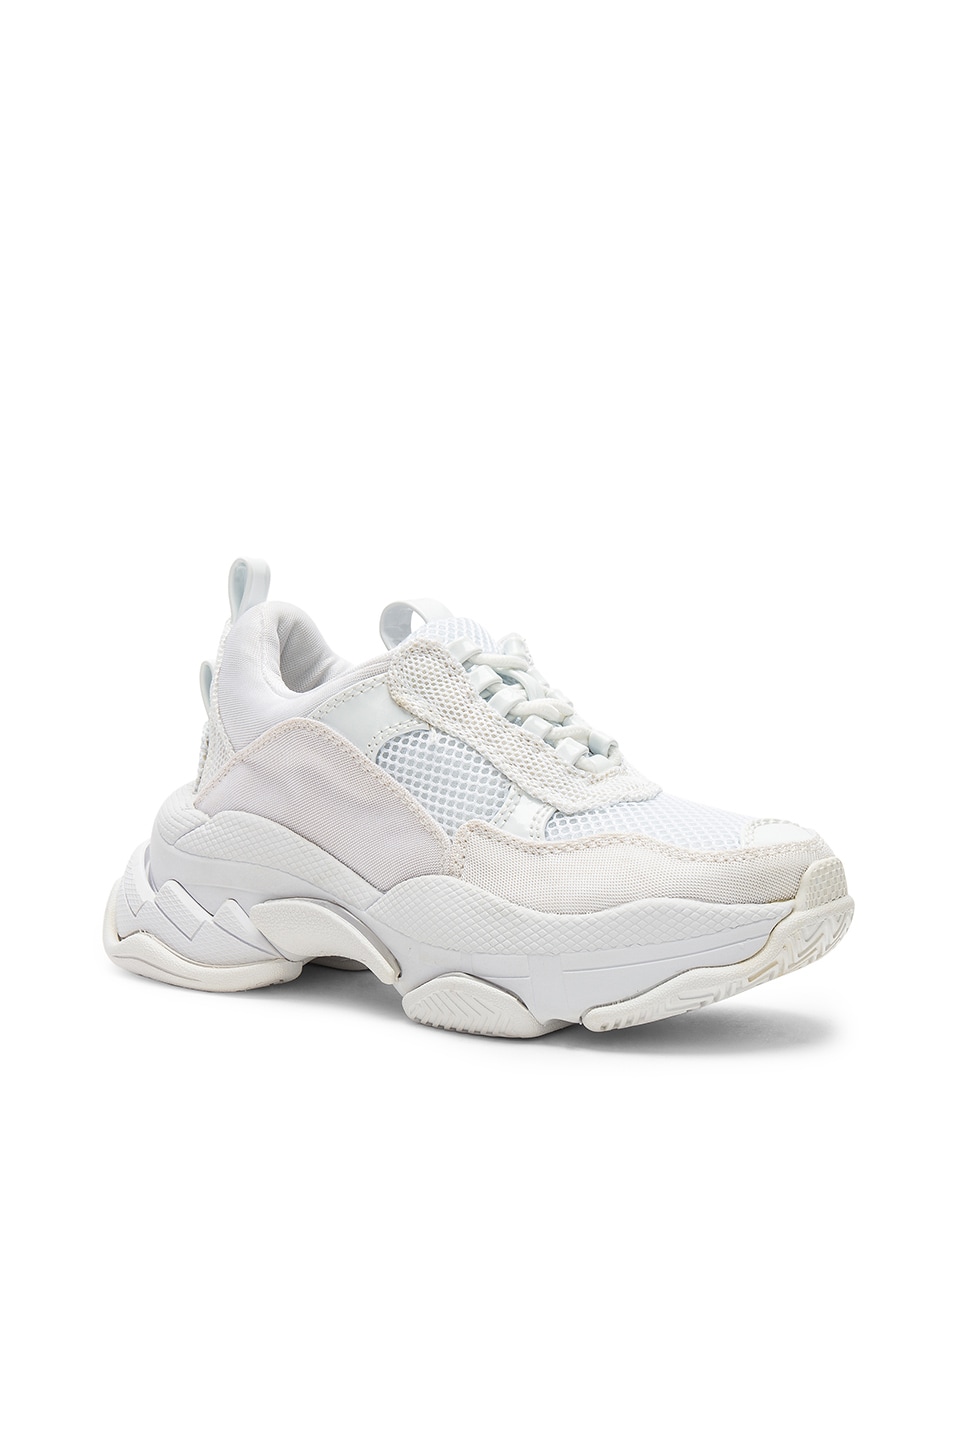 Jeffrey Campbell Lo-Fi Sneaker in White Mesh | REVOLVE